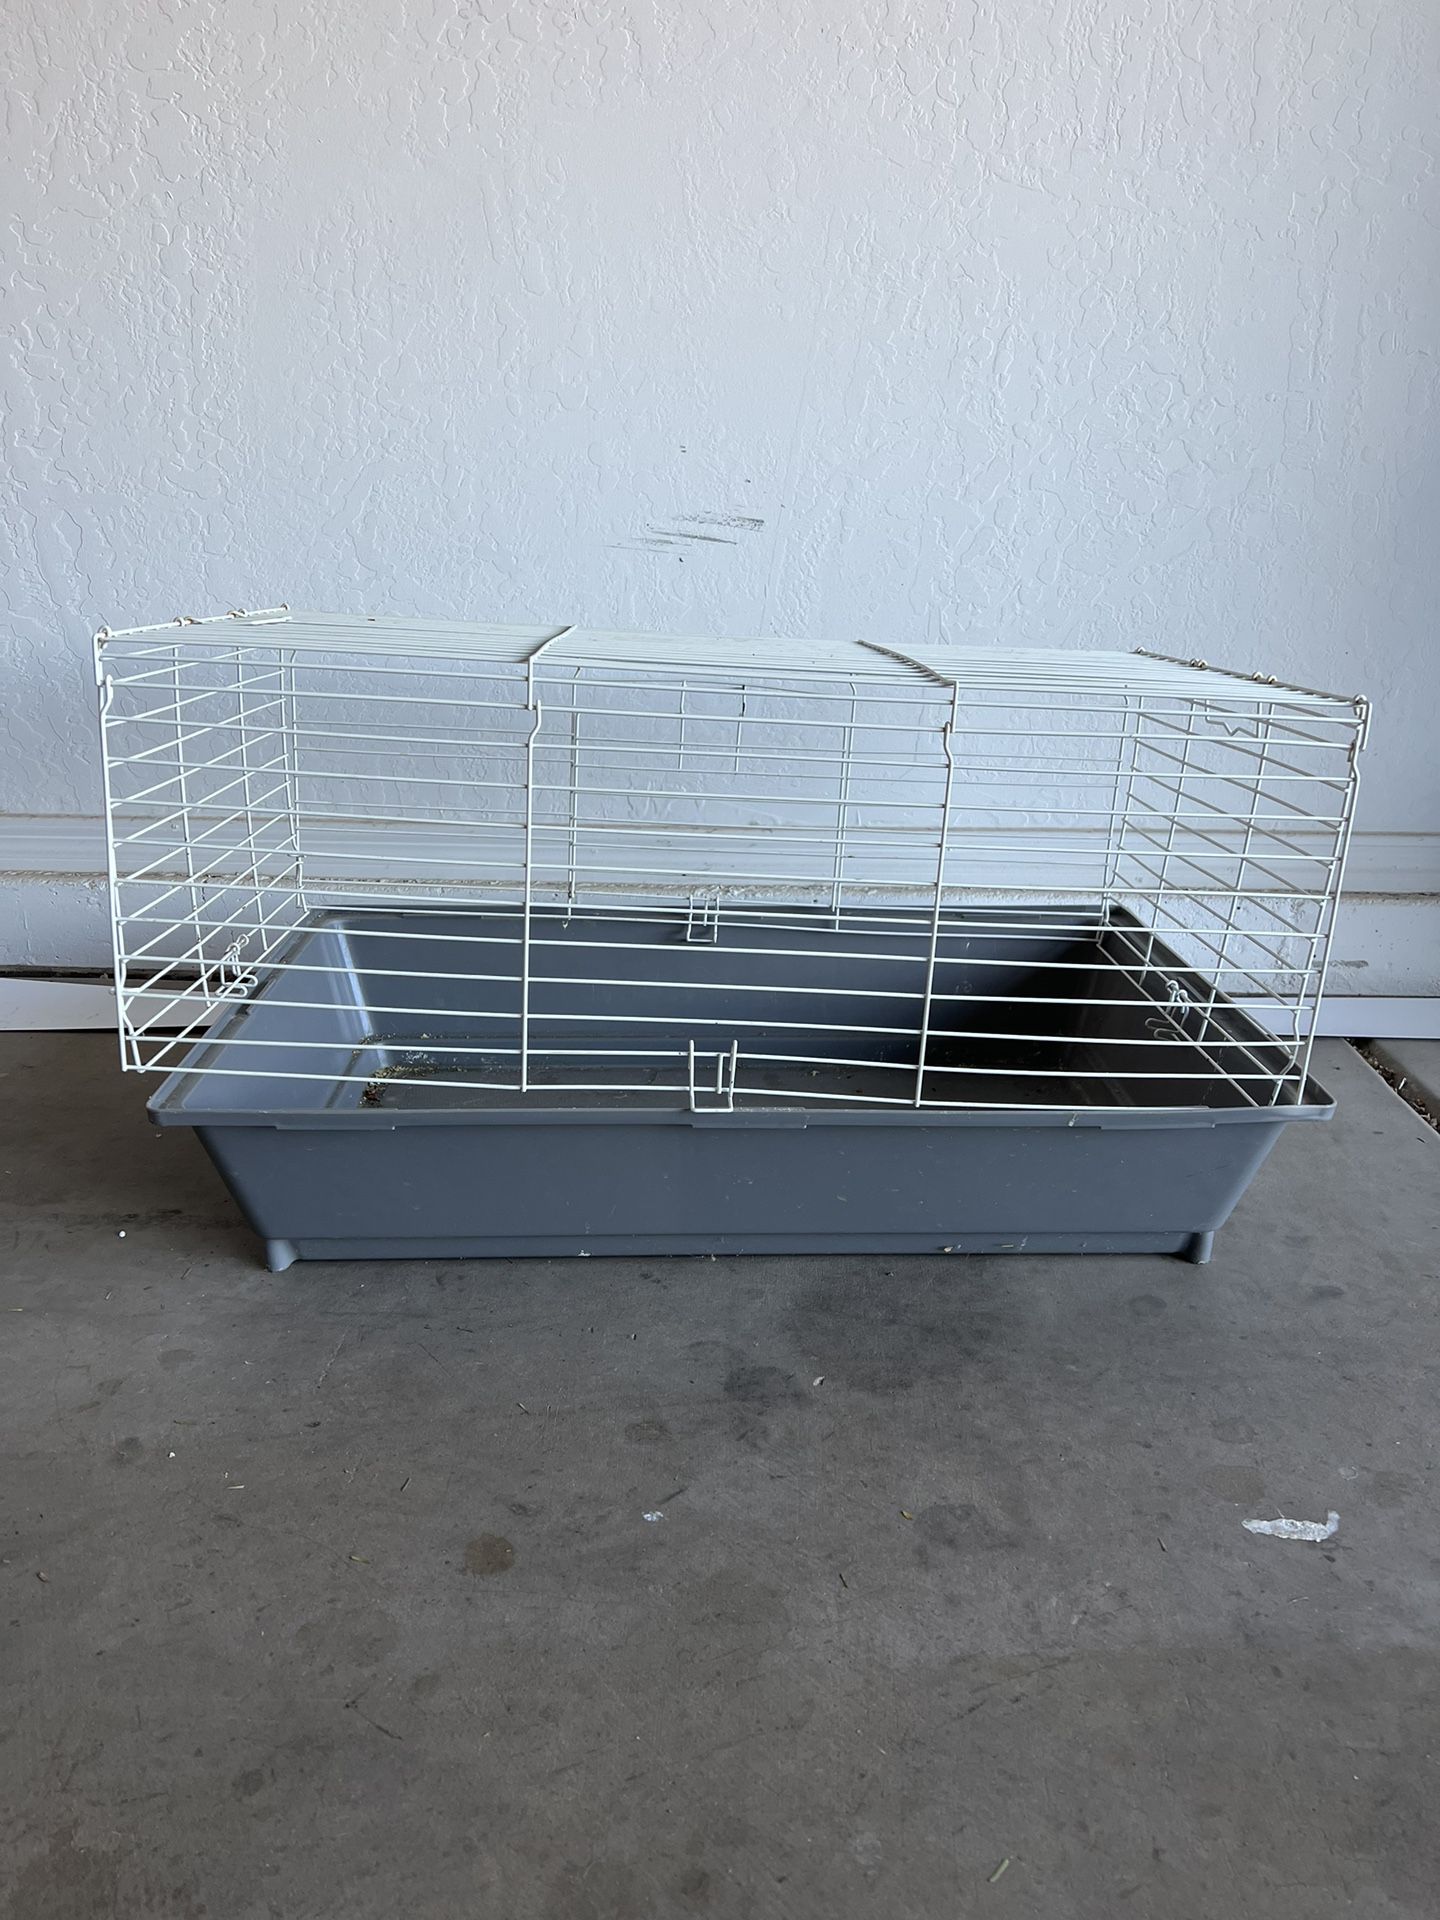 Rabbit , Hamster, Guinea Pig Cage 